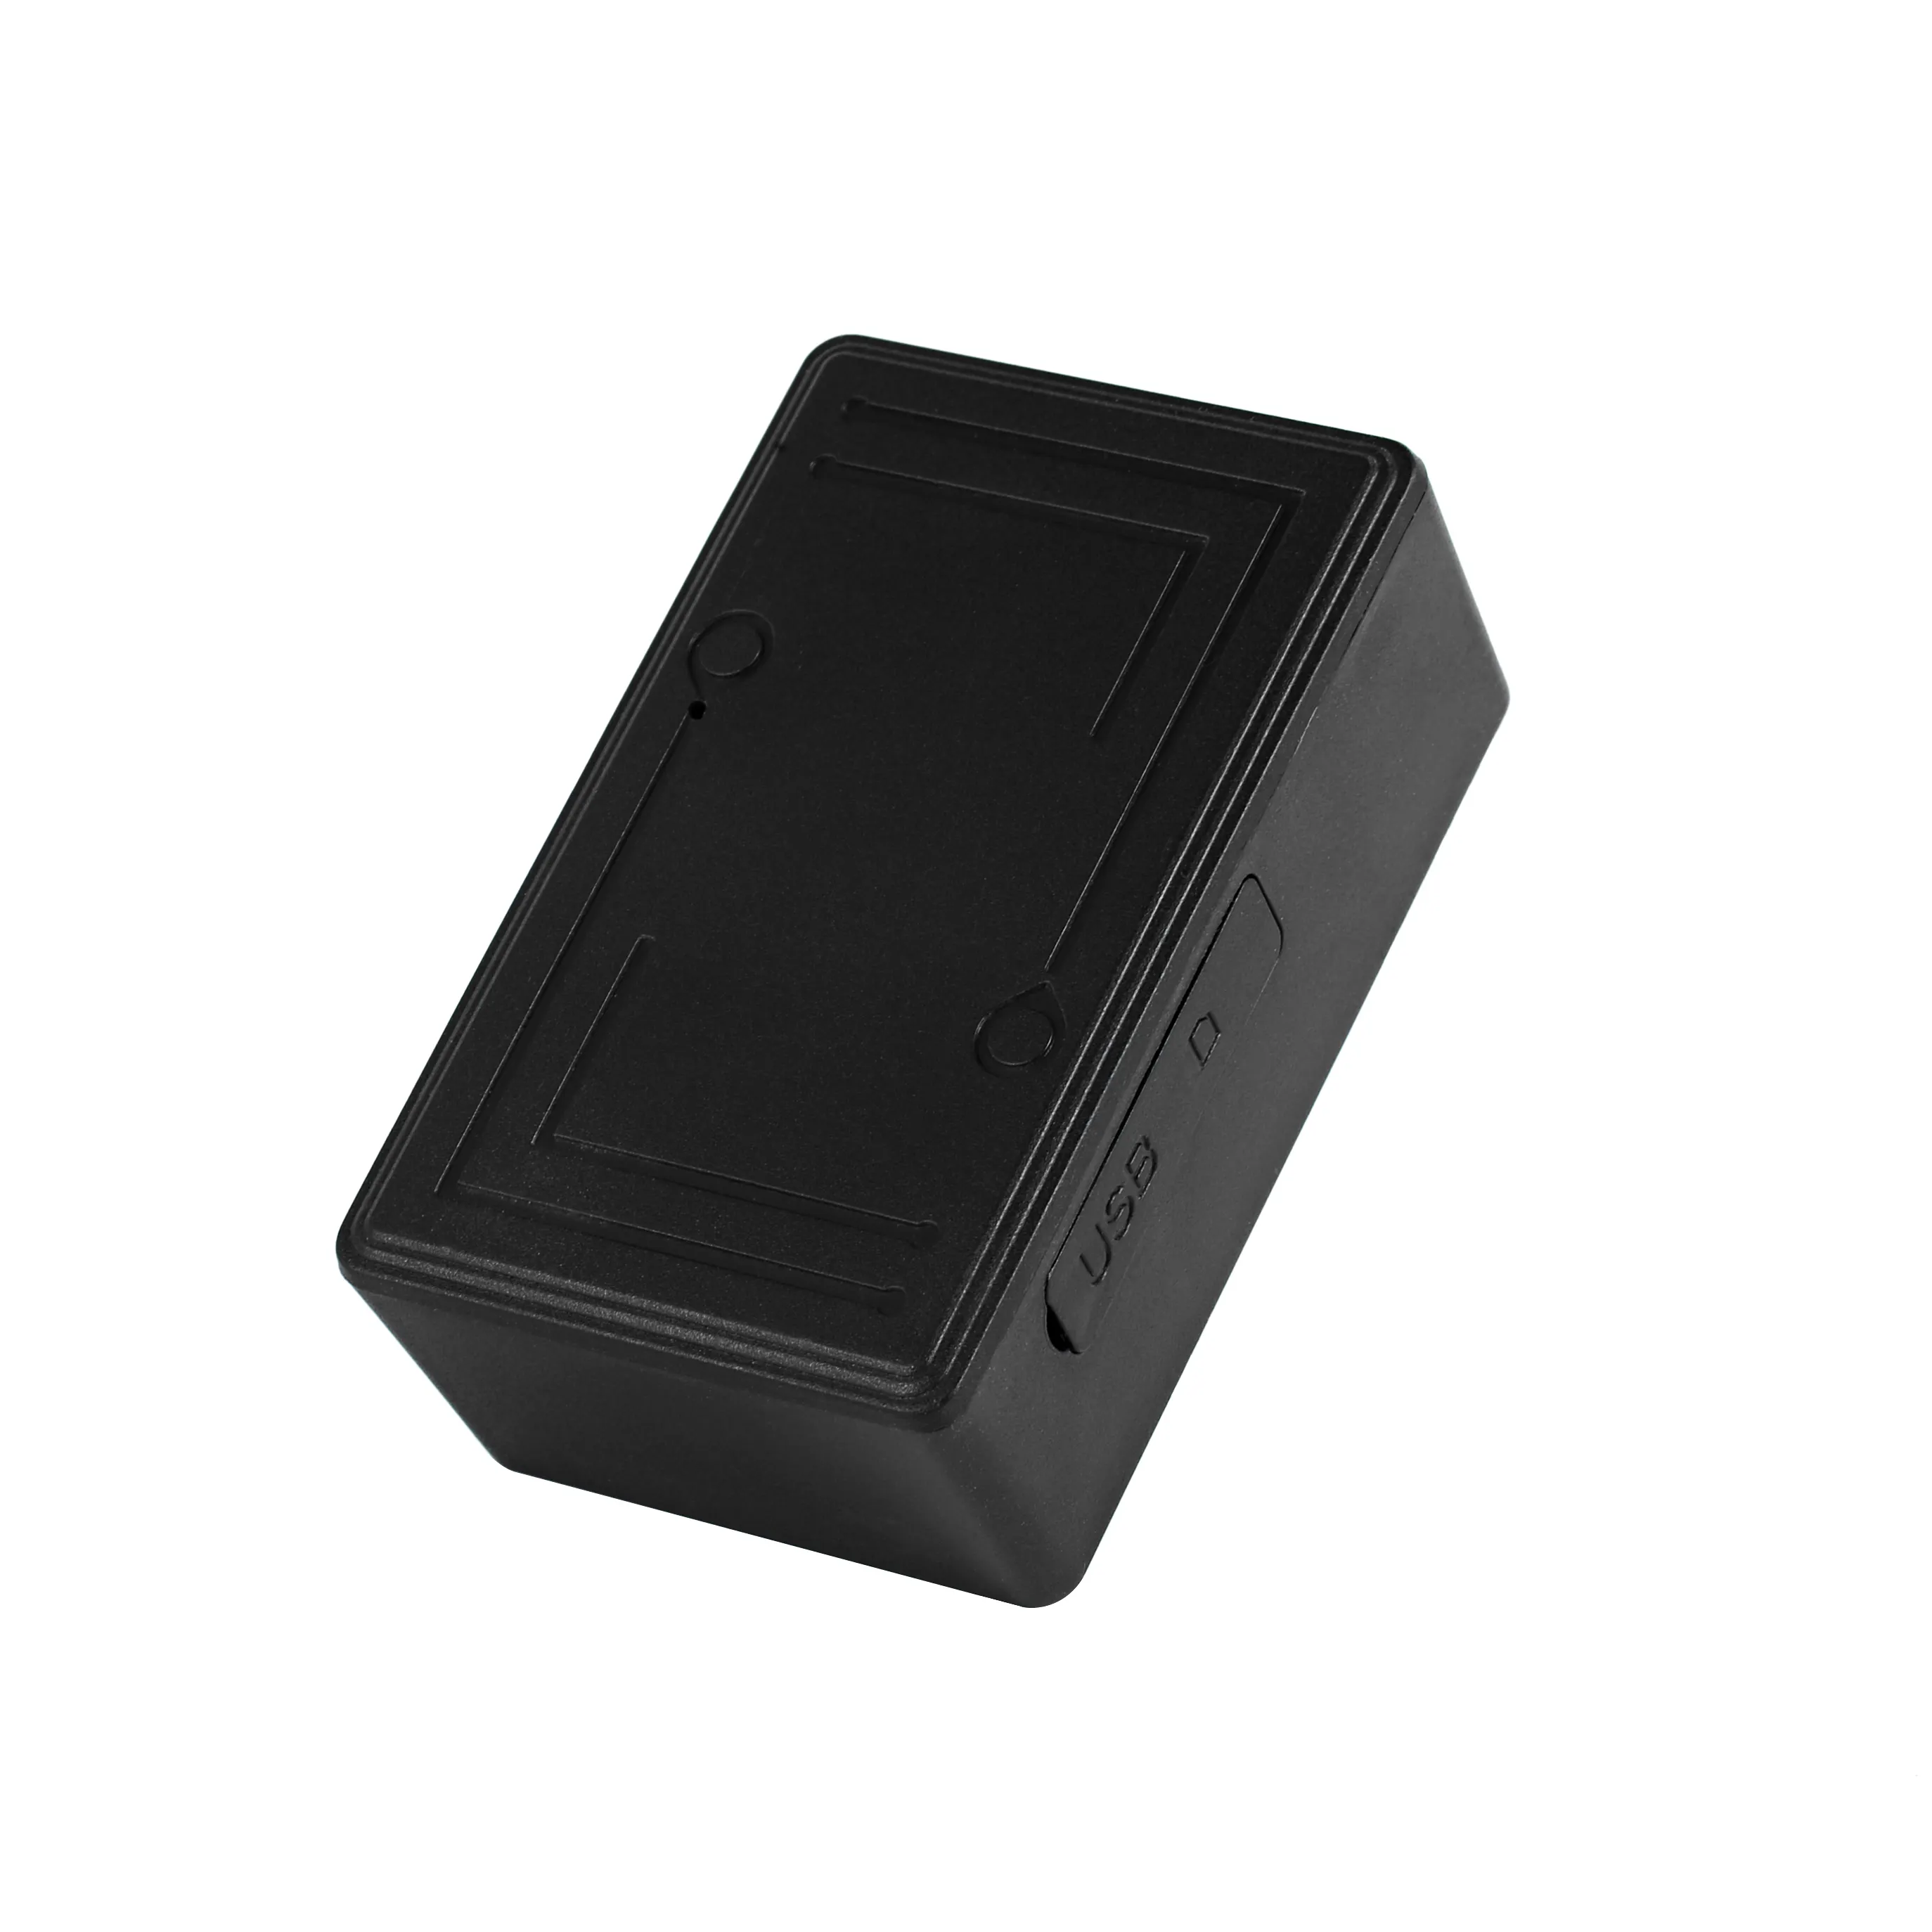 small size gps locator, portable mini gps tracker for notebook computer